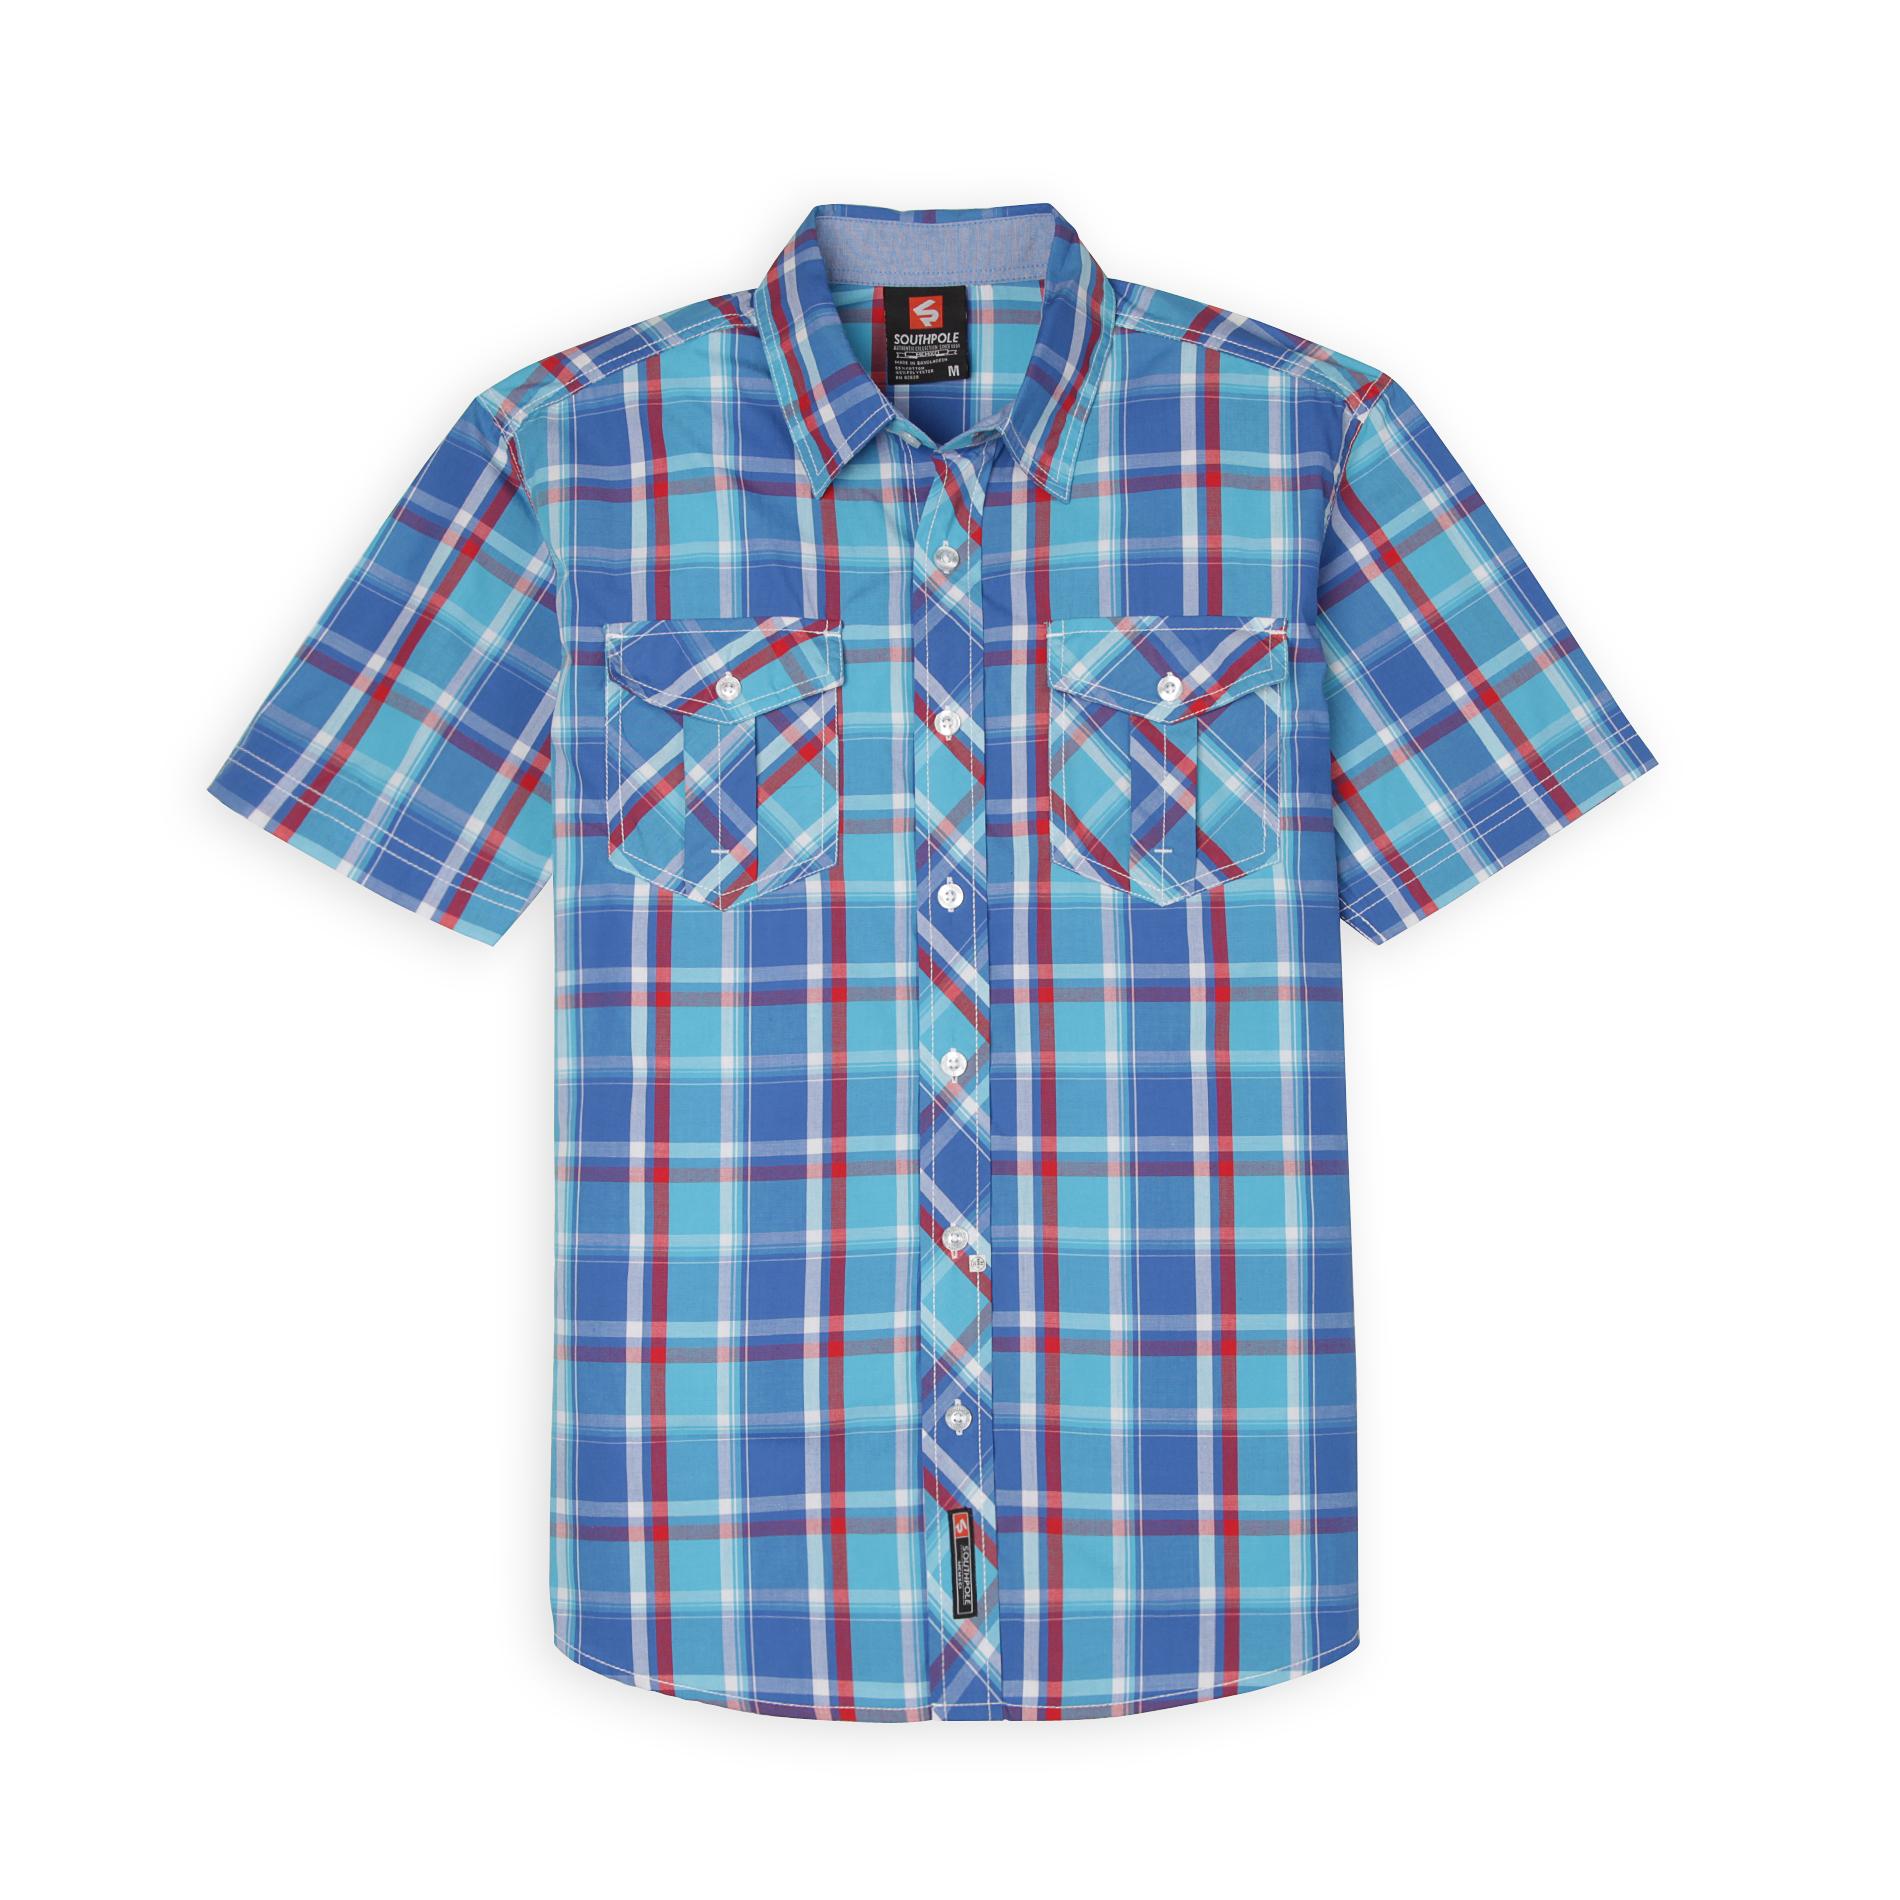 Southpole Young Men's Short-Sleeve Shirt - Plaid